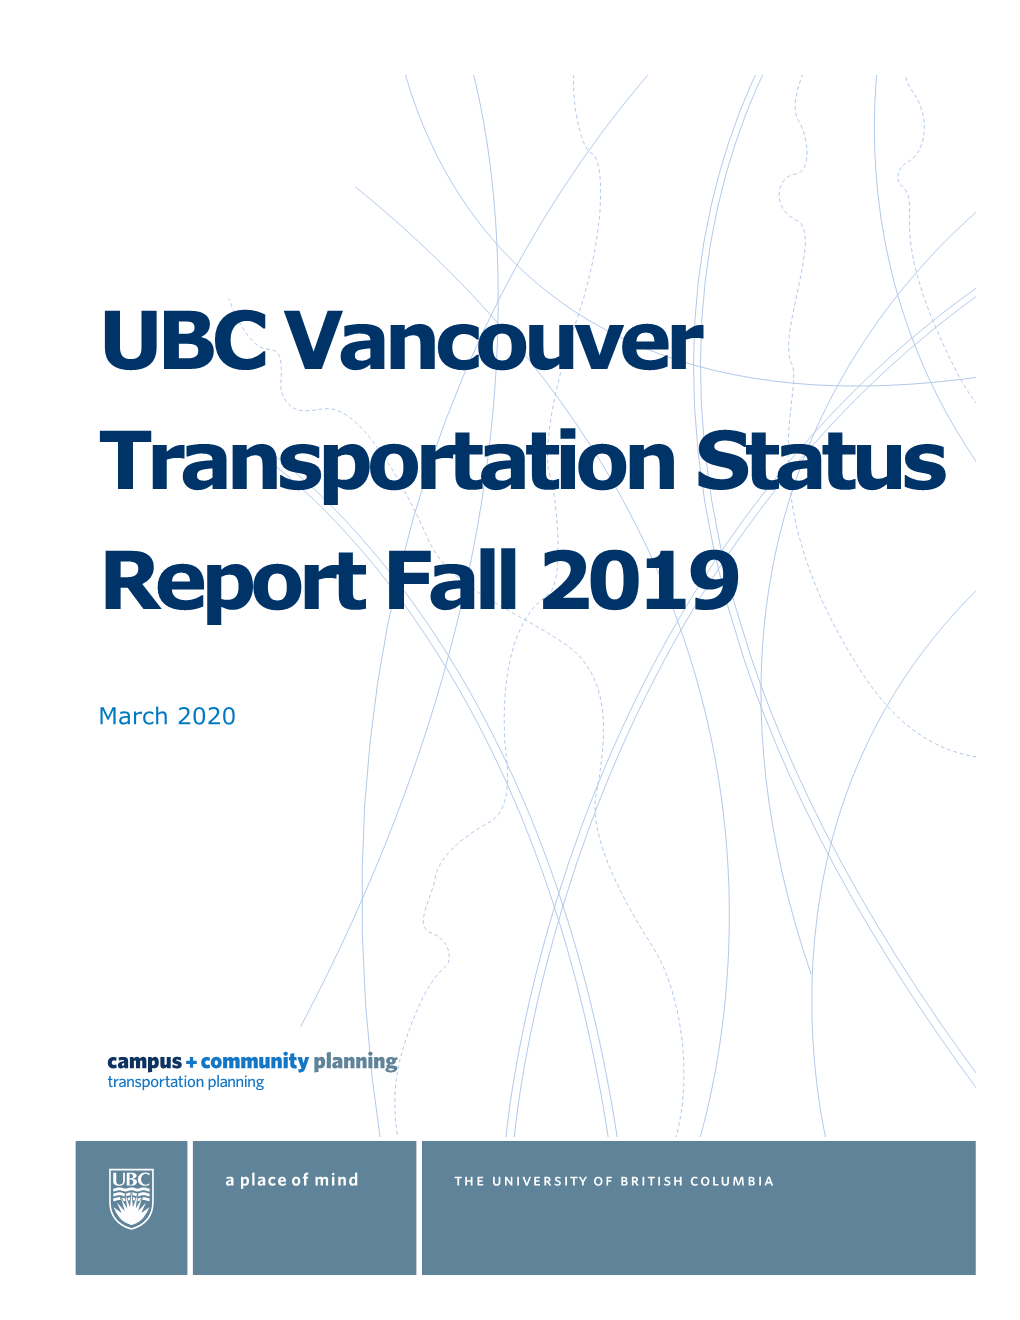 UBC Vancouver Transportation Status Report Fall 2019